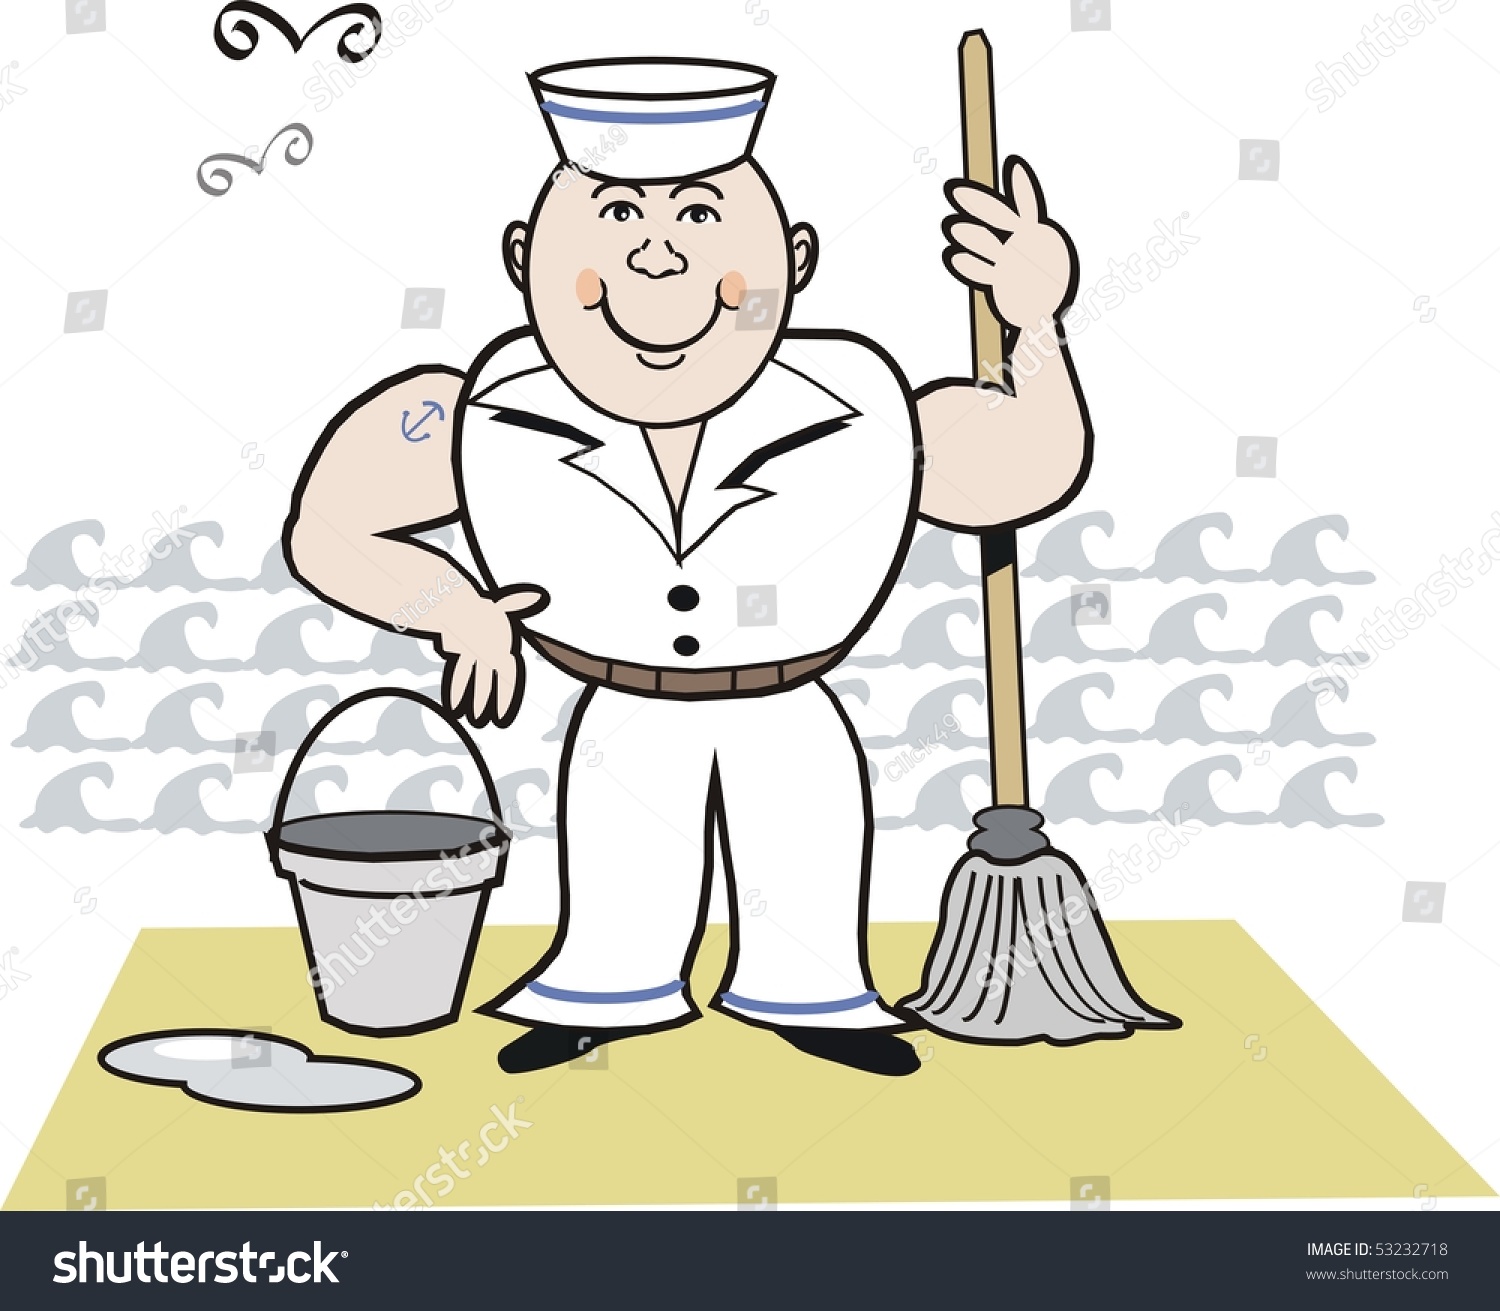 stock-vector-cartoon-of-happy-sailor-in-uniform-with-mop-and-bucket-cleaning-equipment-53232718.jpg